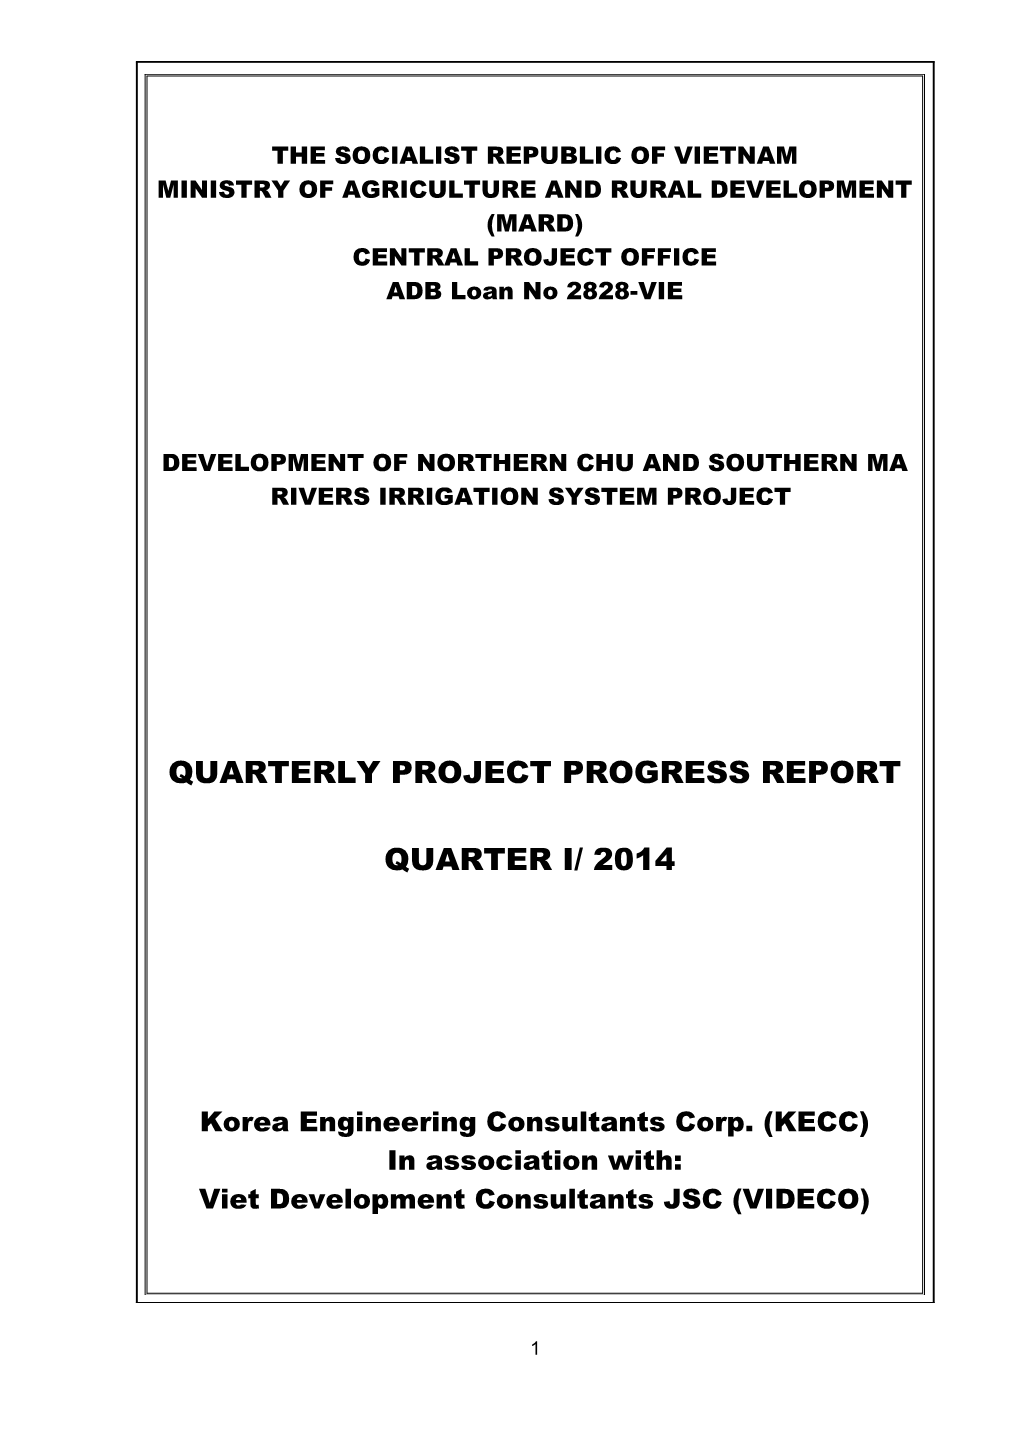 Project Progress Report